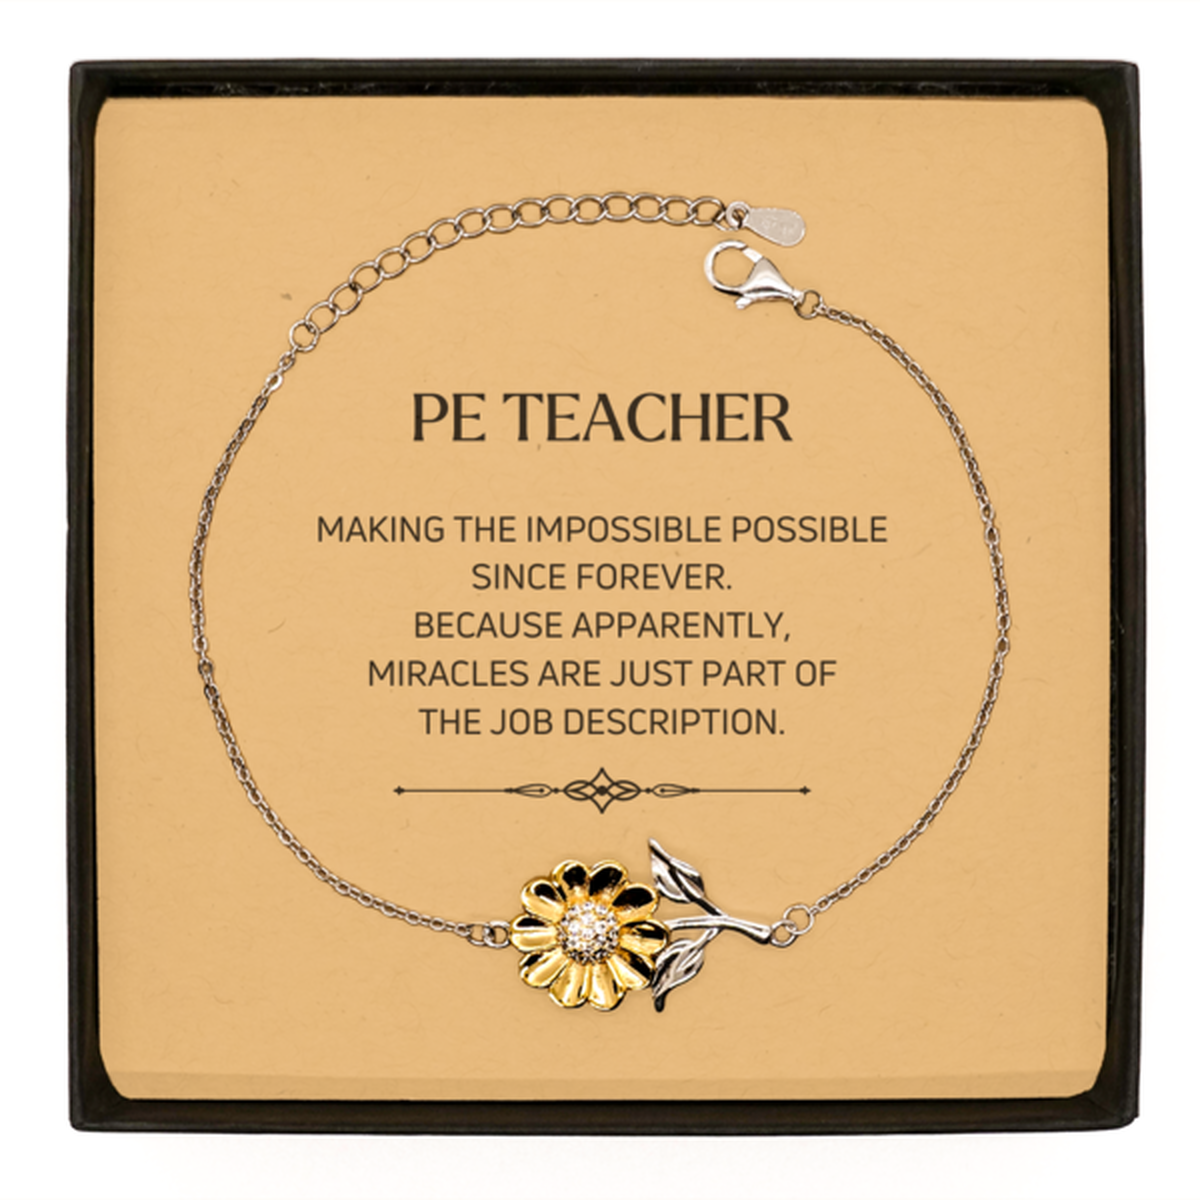 Funny PE Teacher Gifts, Miracles are just part of the job description, Inspirational Birthday Sunflower Bracelet For PE Teacher, Men, Women, Coworkers, Friends, Boss